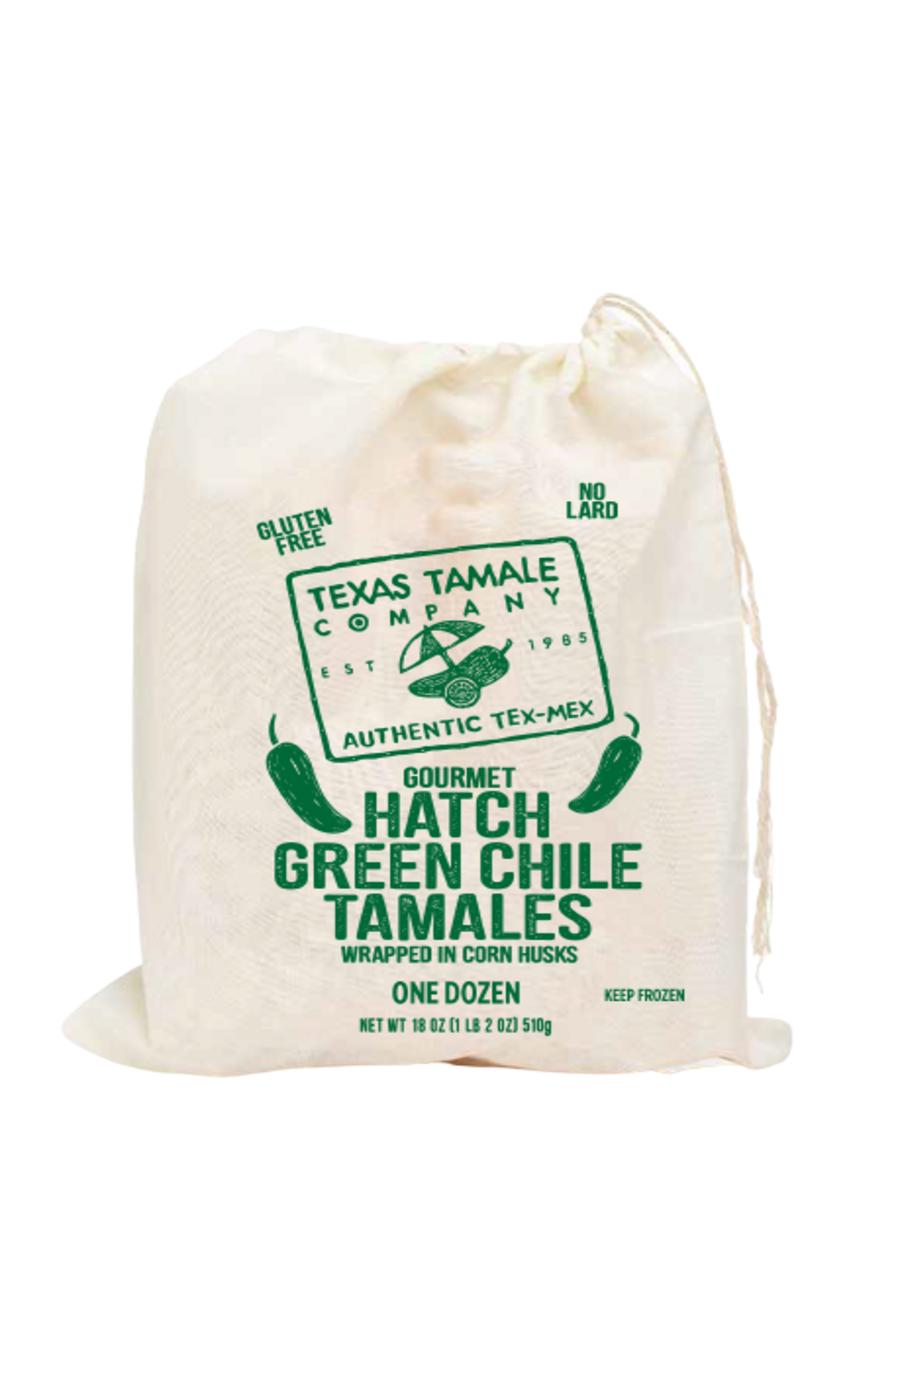 Microwave Tamale Steamer Bag